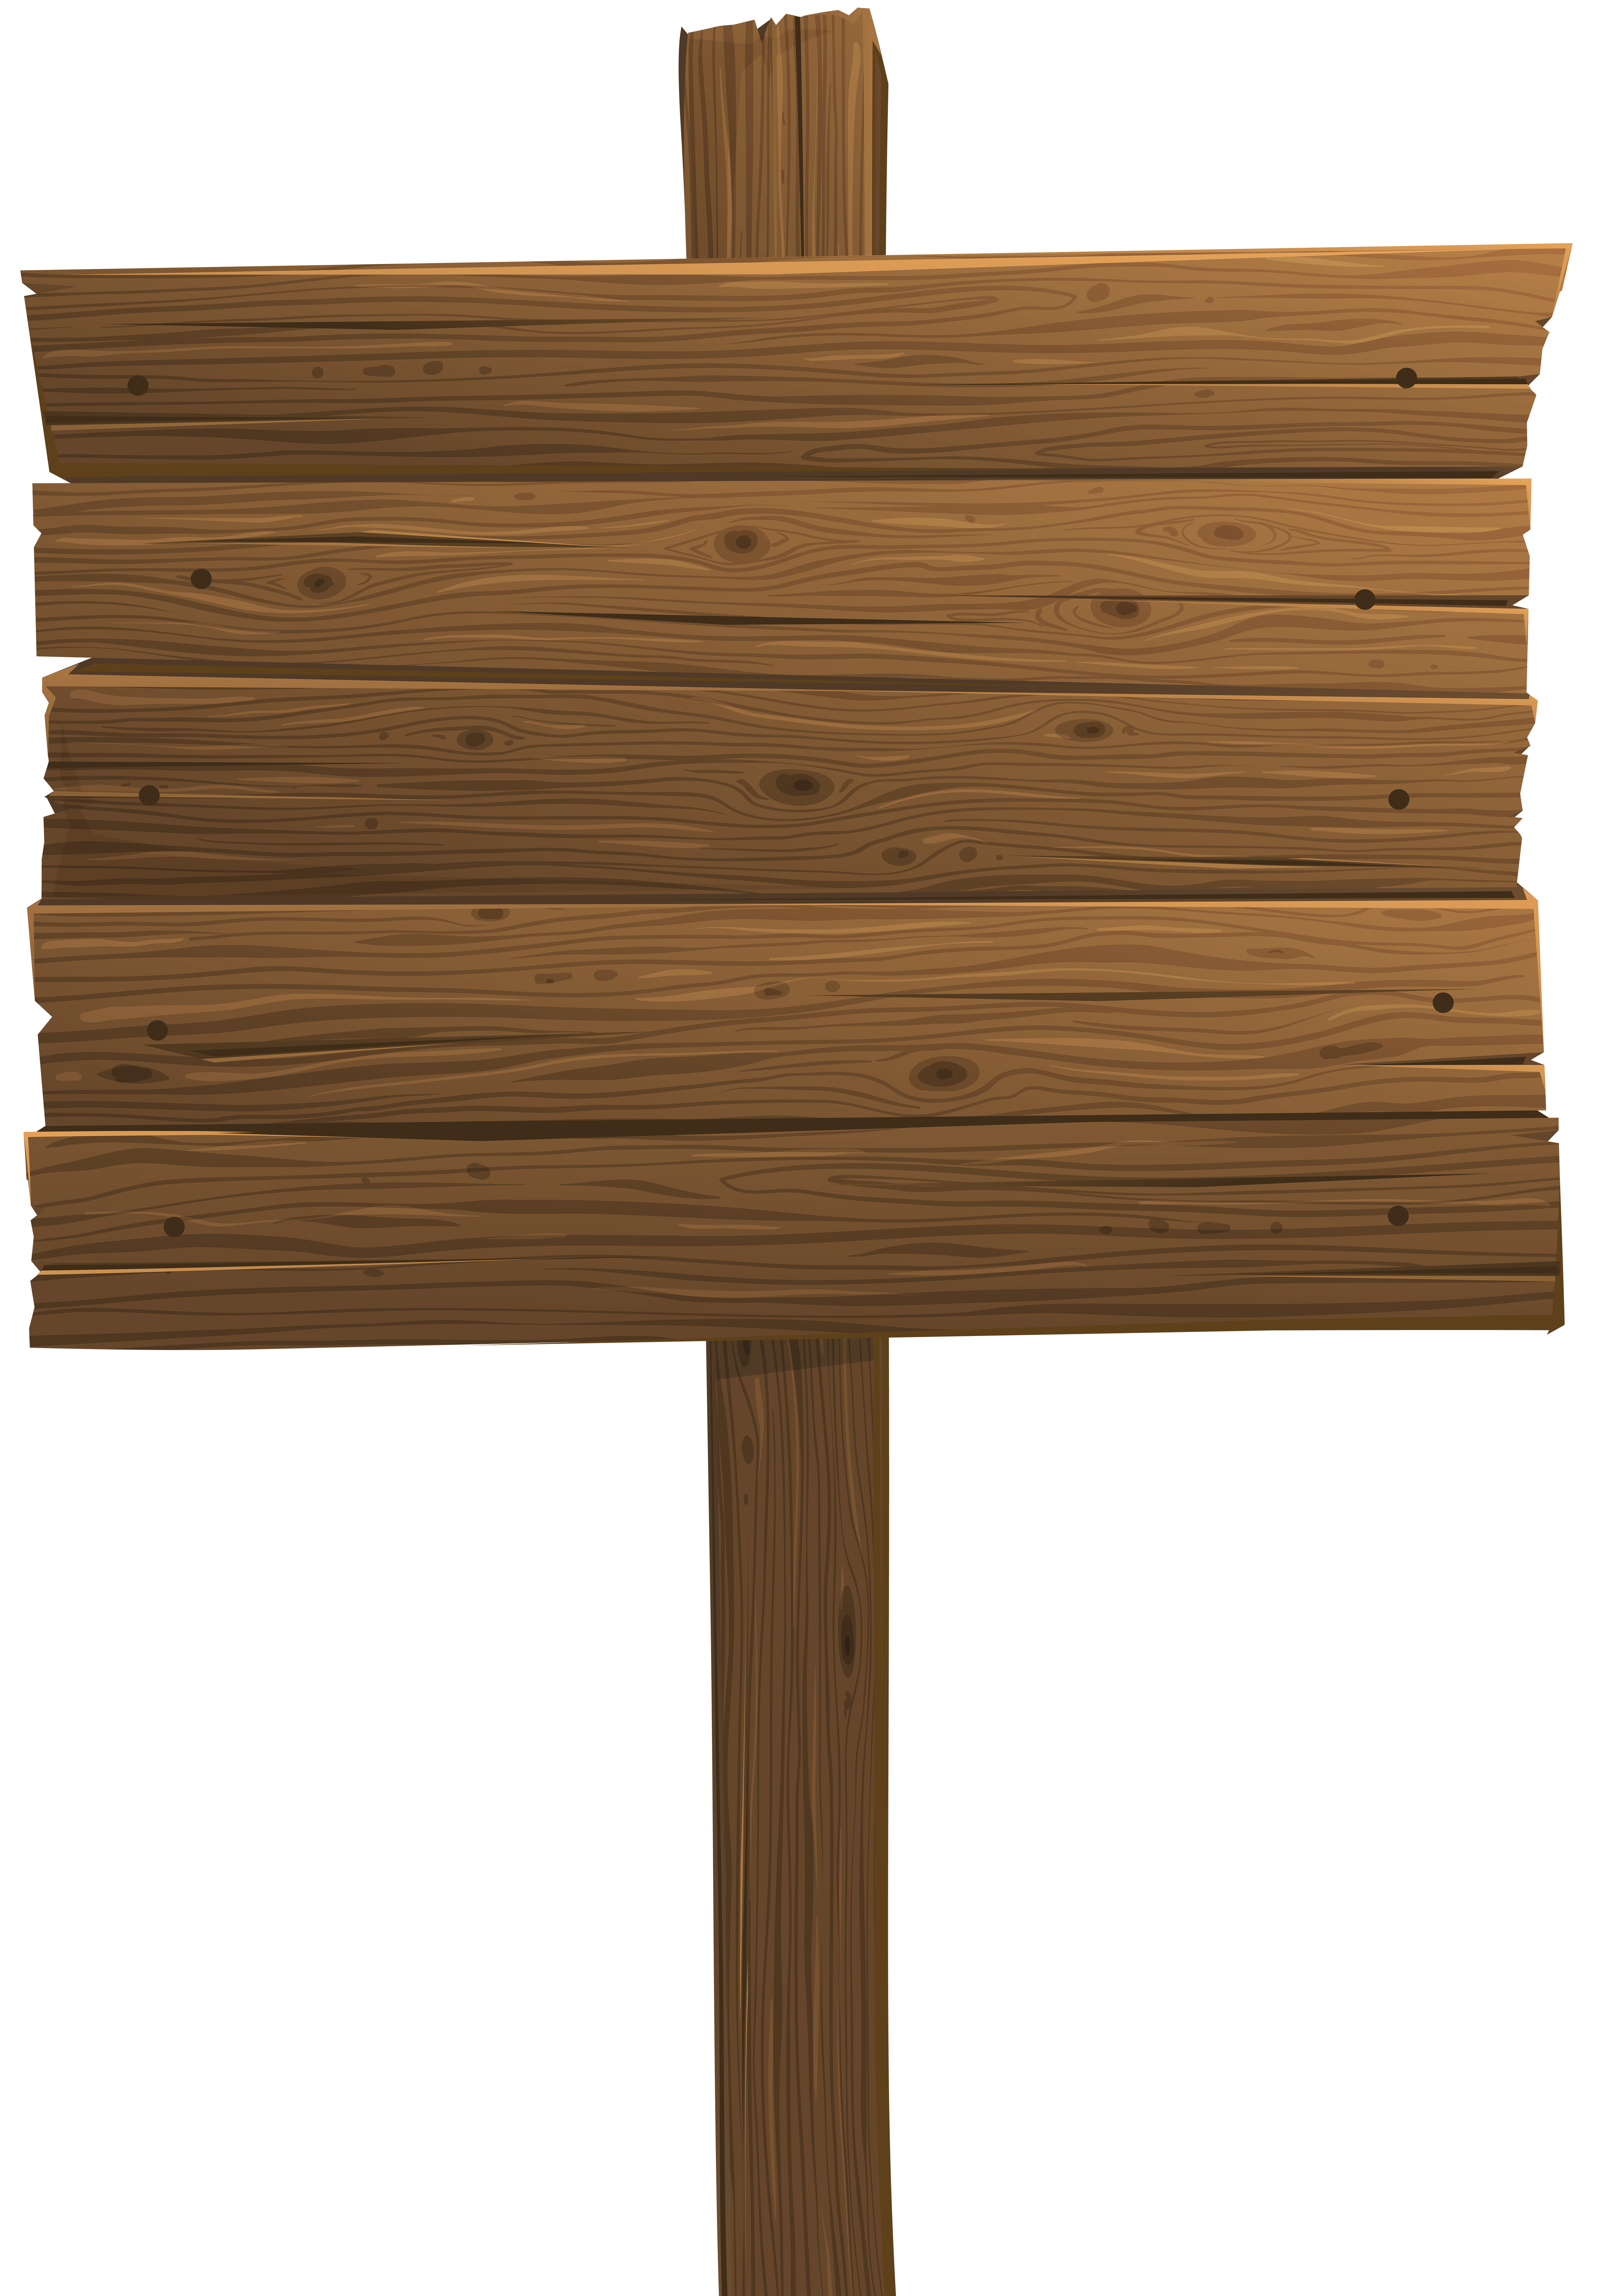 Wooden Sign PNG Clip Art Transparent Image